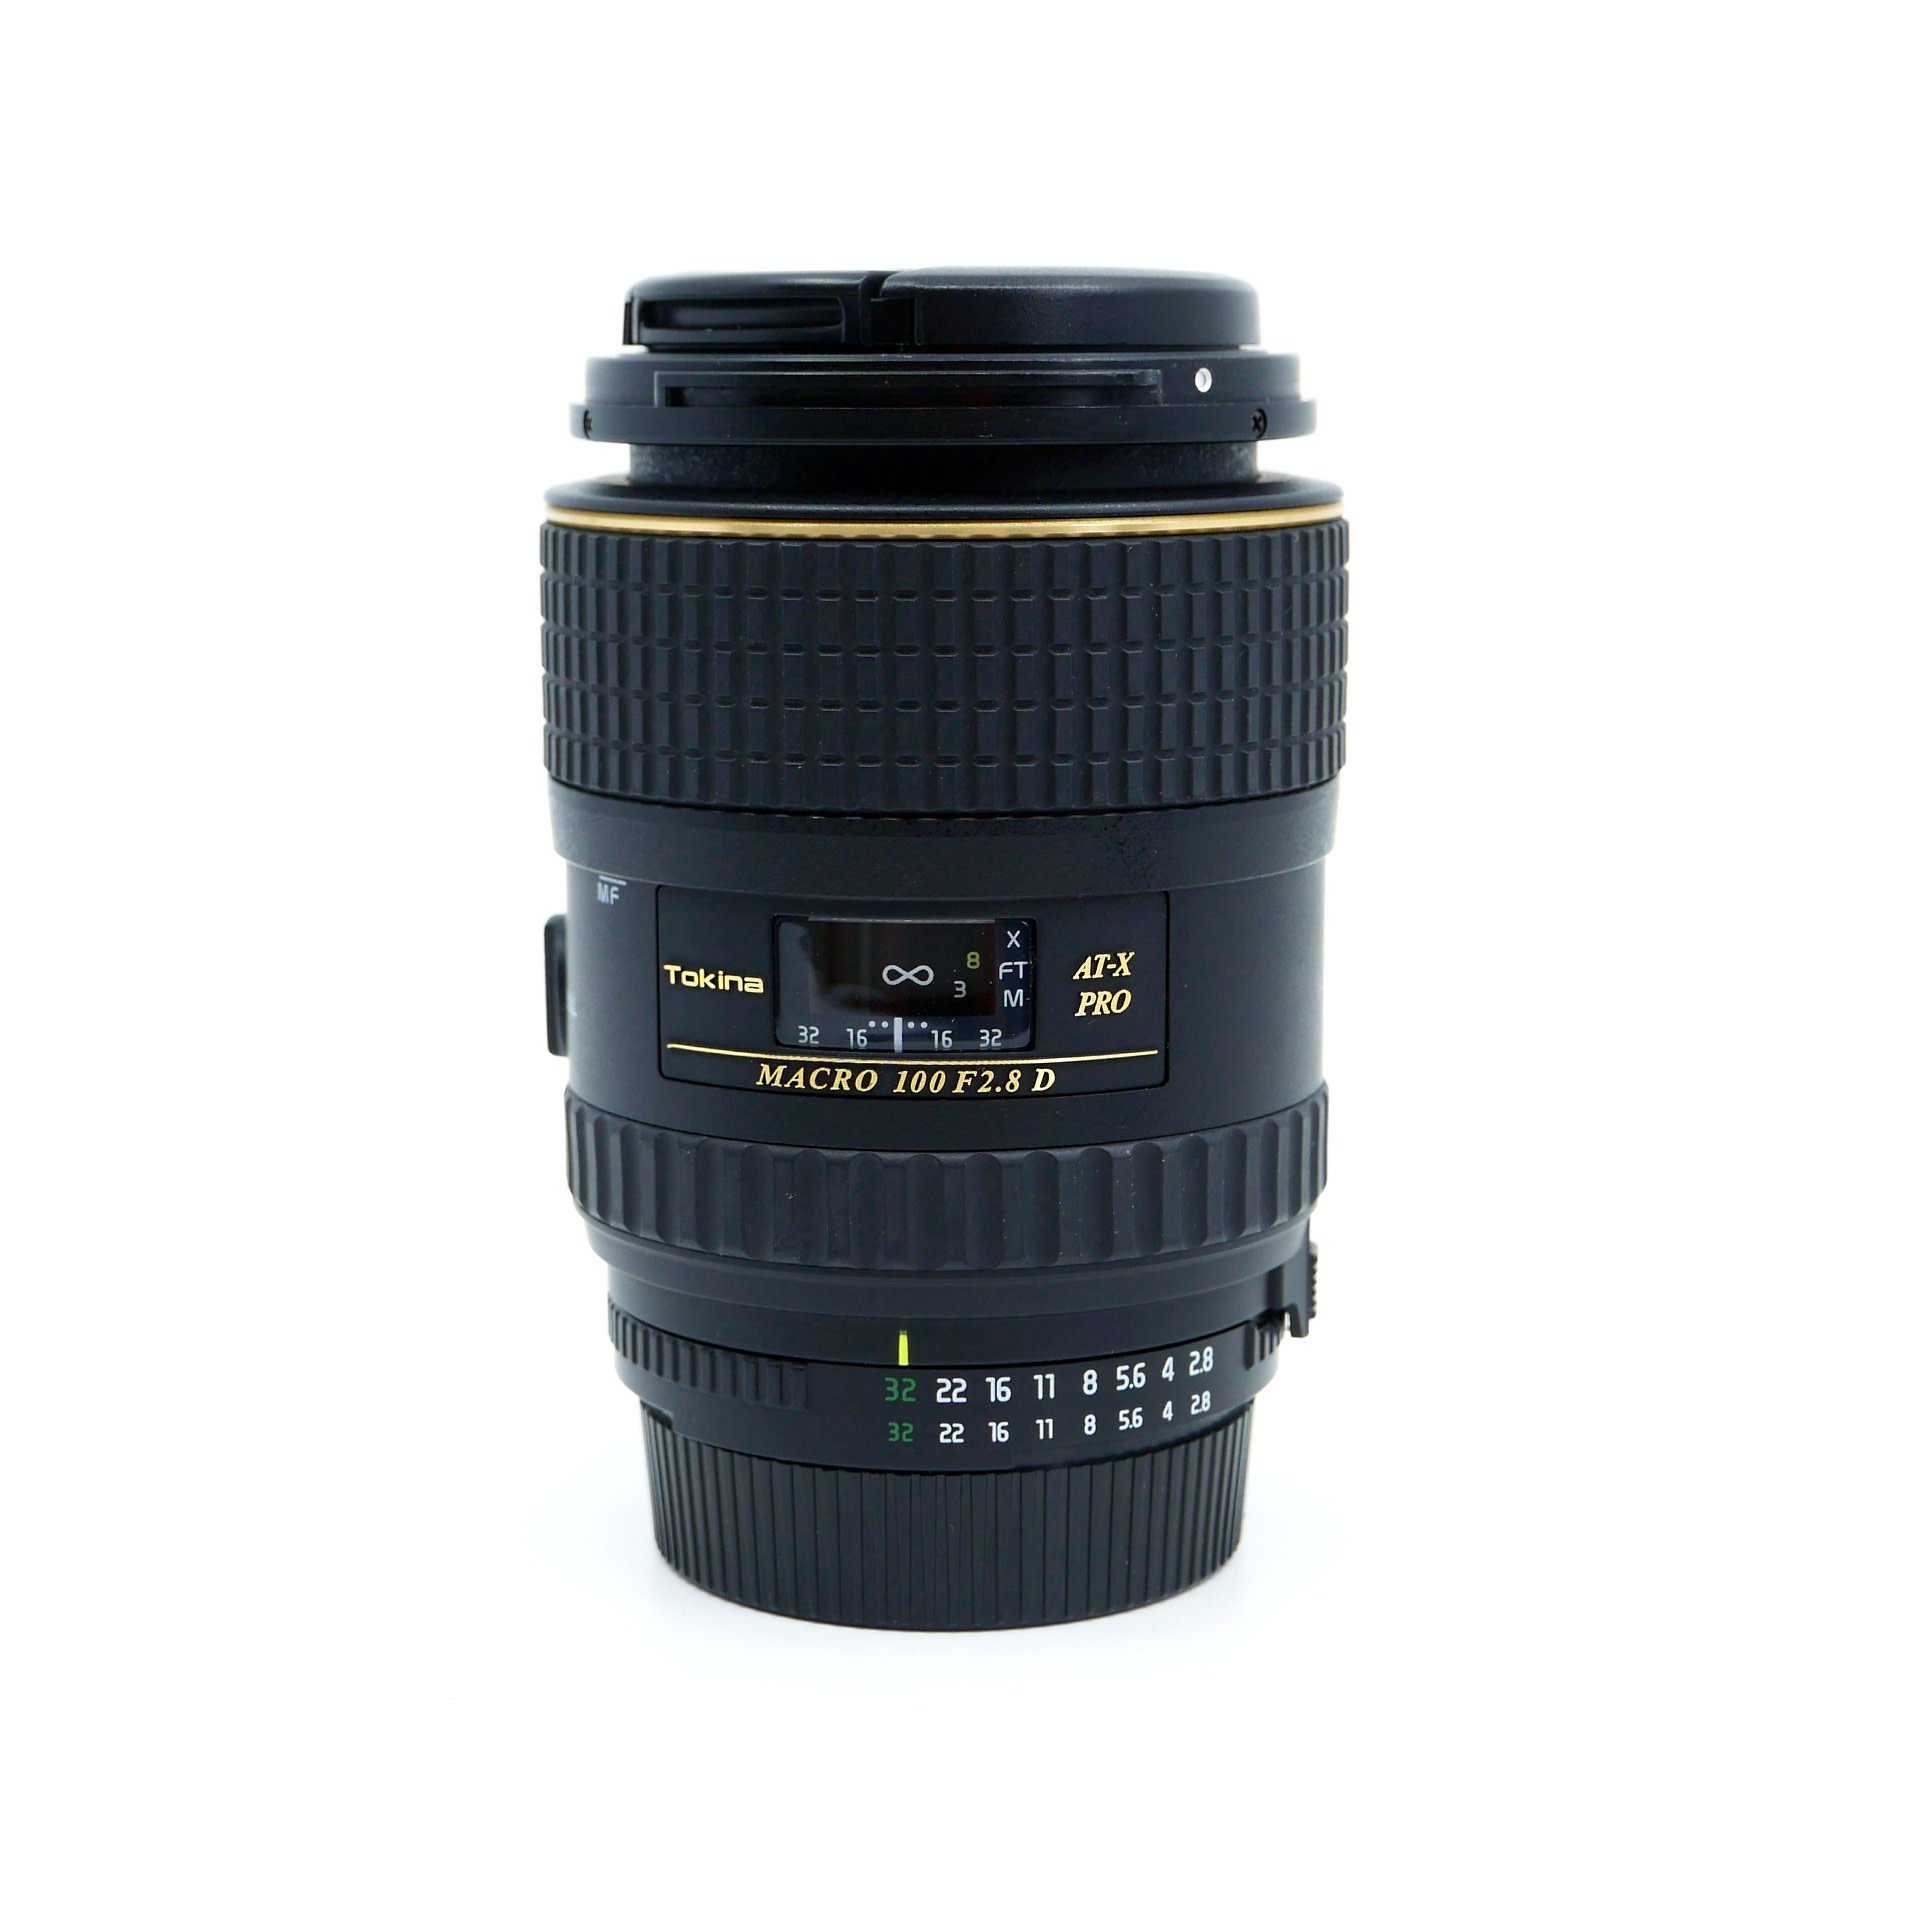 Tokina 100mm f/2.8 D Macro AT-X Pro Lens for Nikon (Used) - Pro 